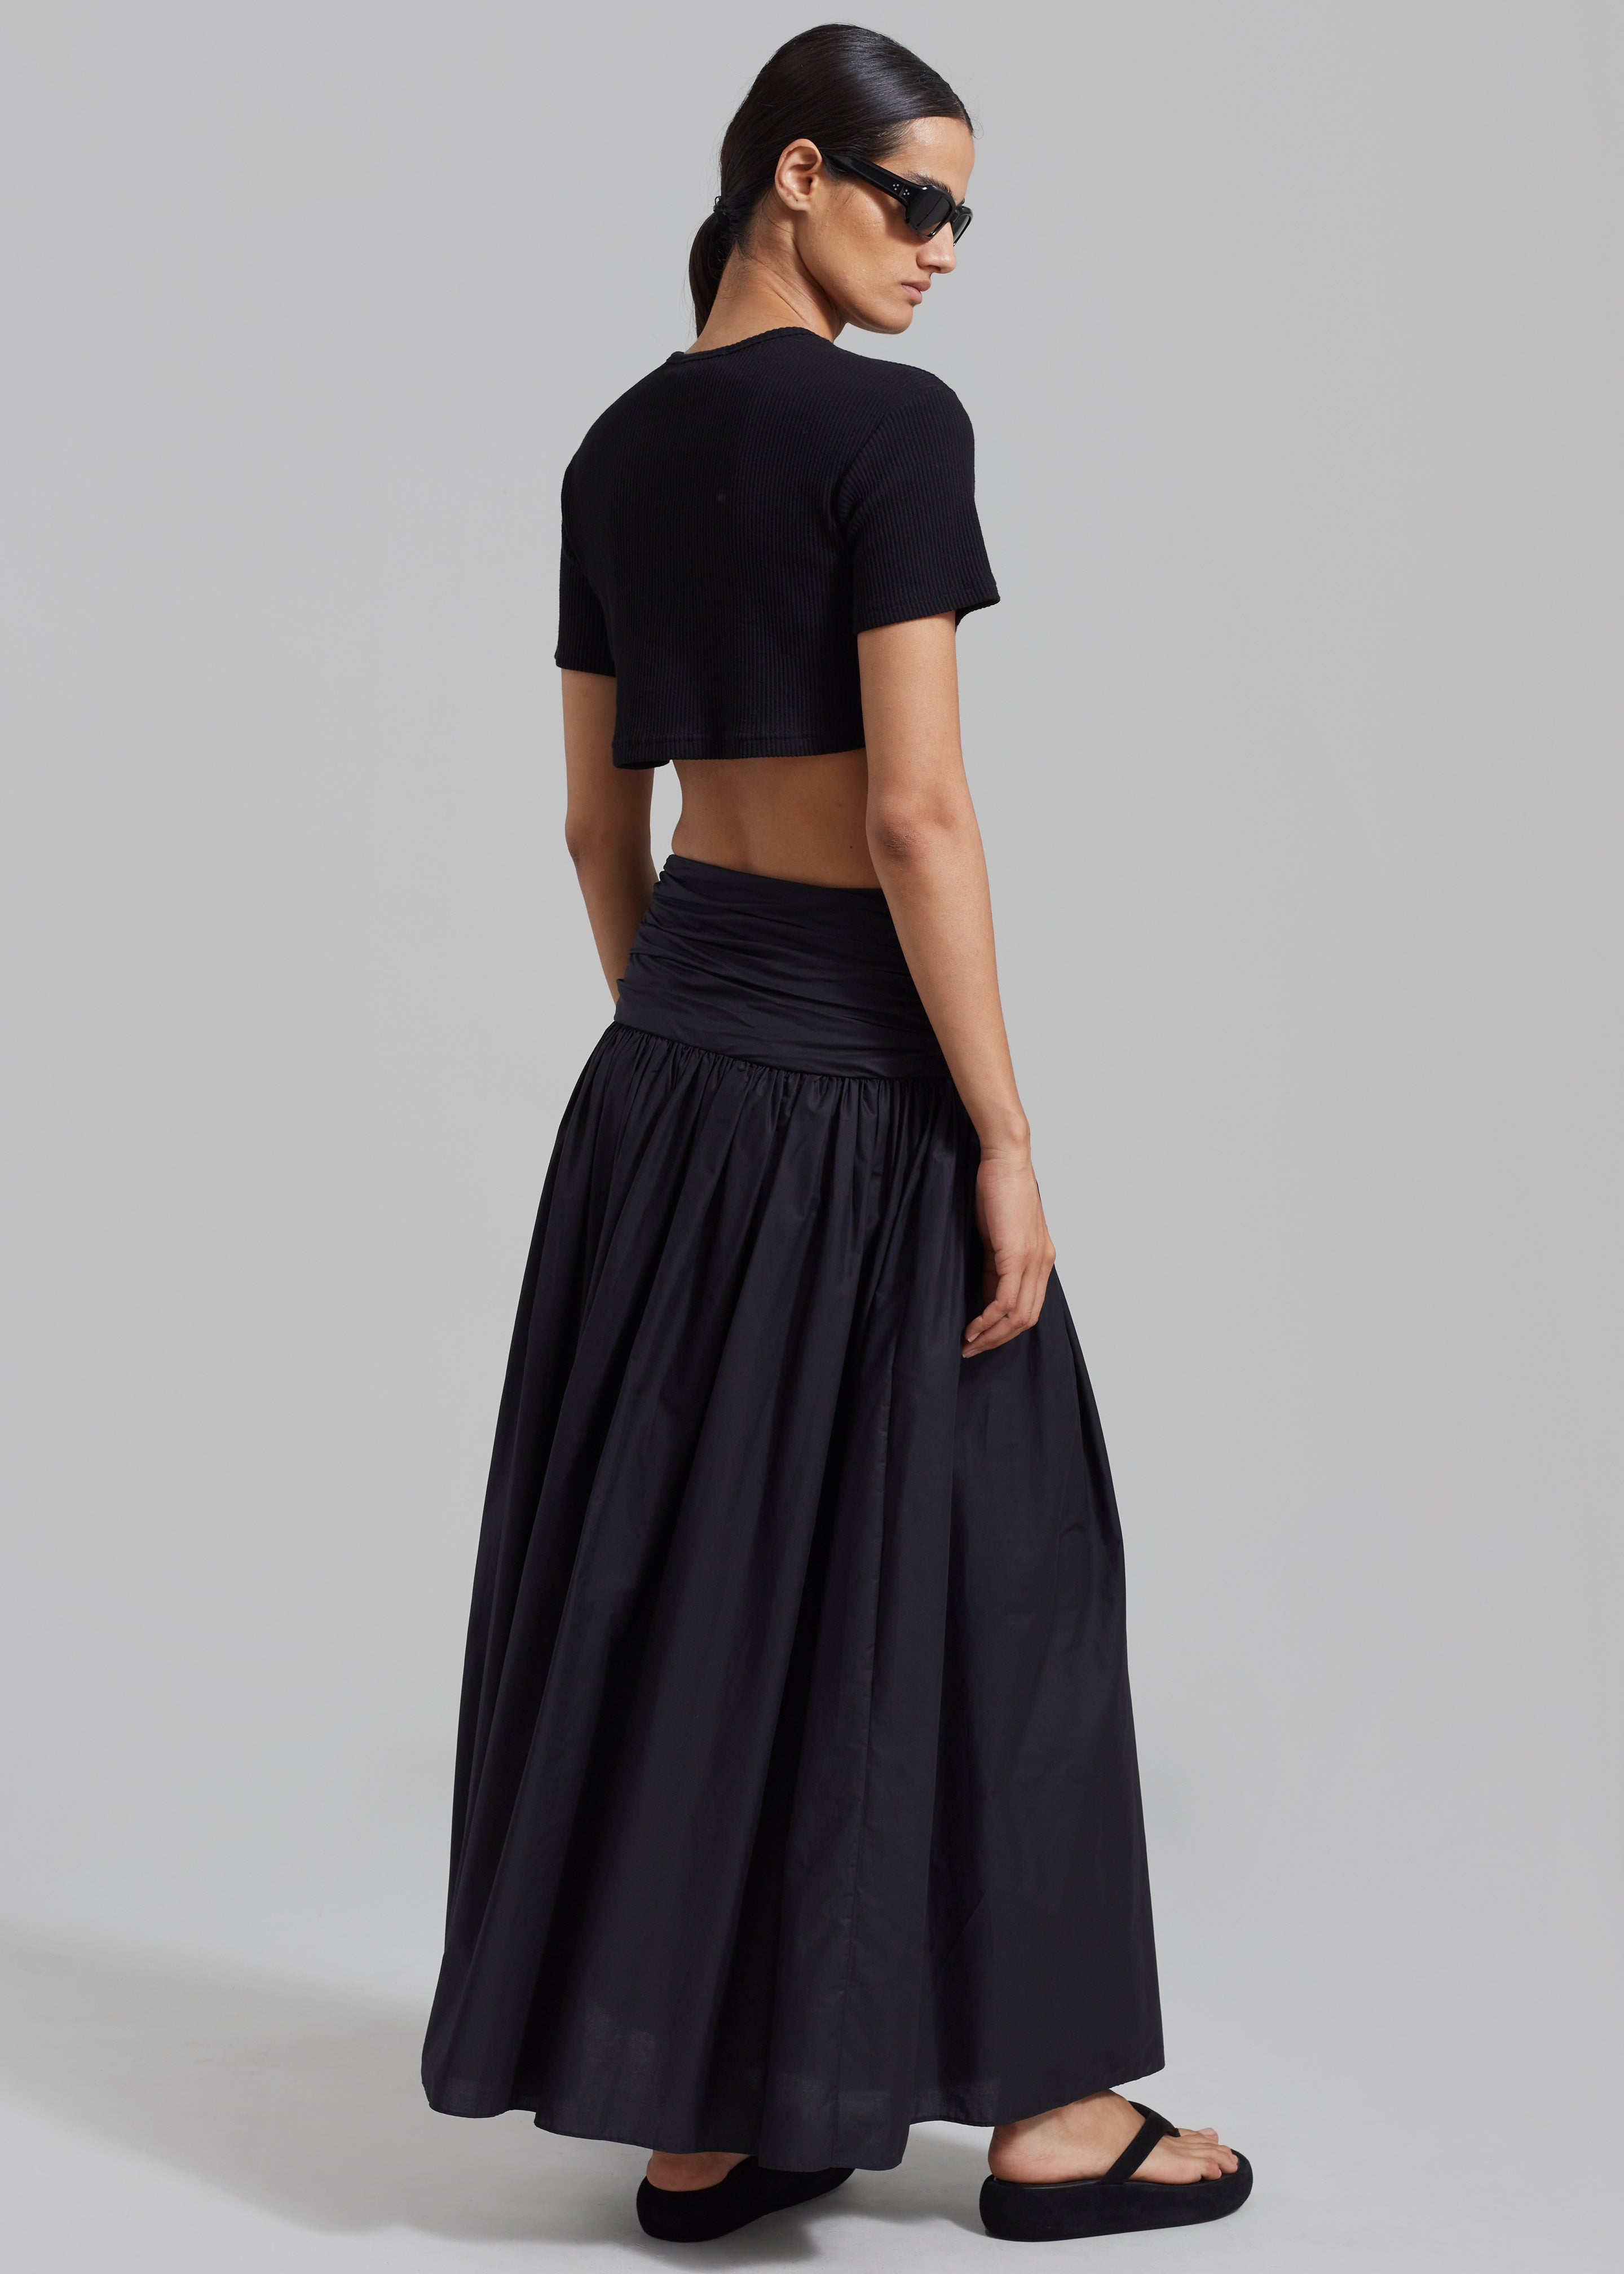 Matteau Rouched Maxi Skirt - Black - 7